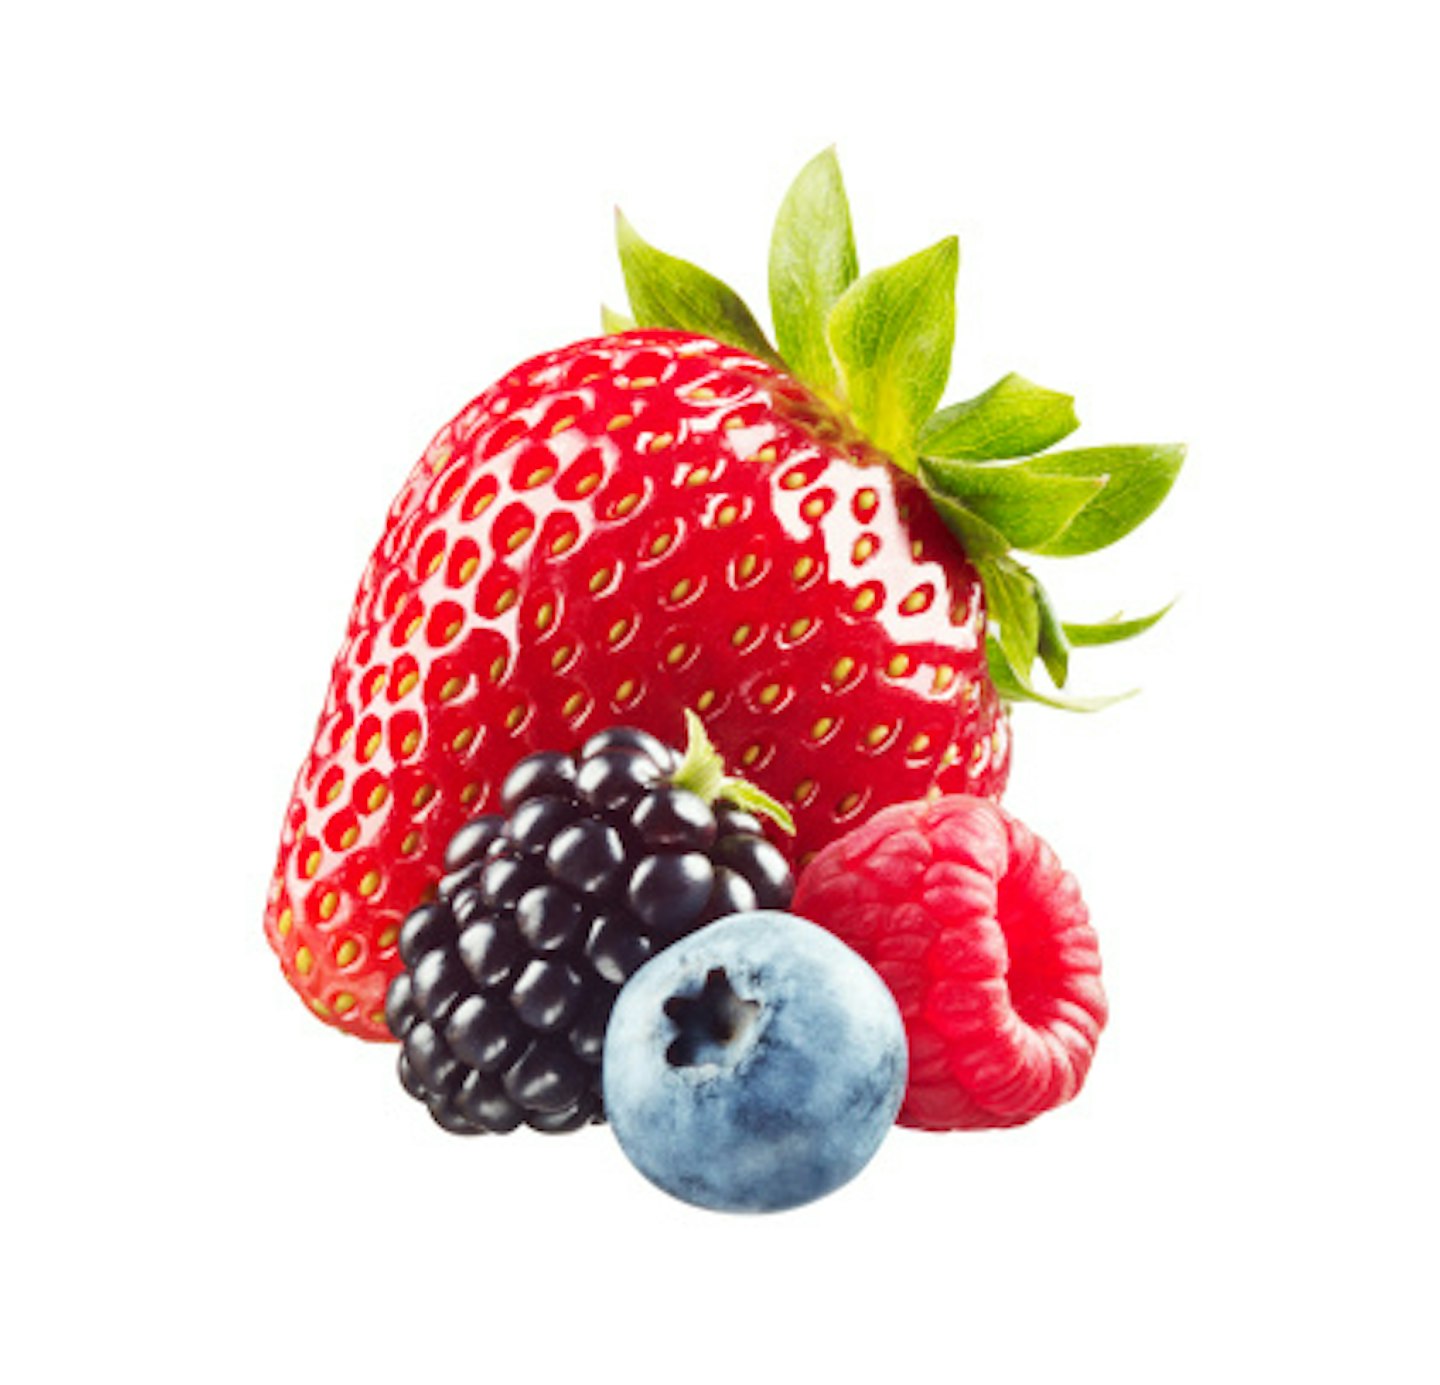 Berries are full of antioxidants